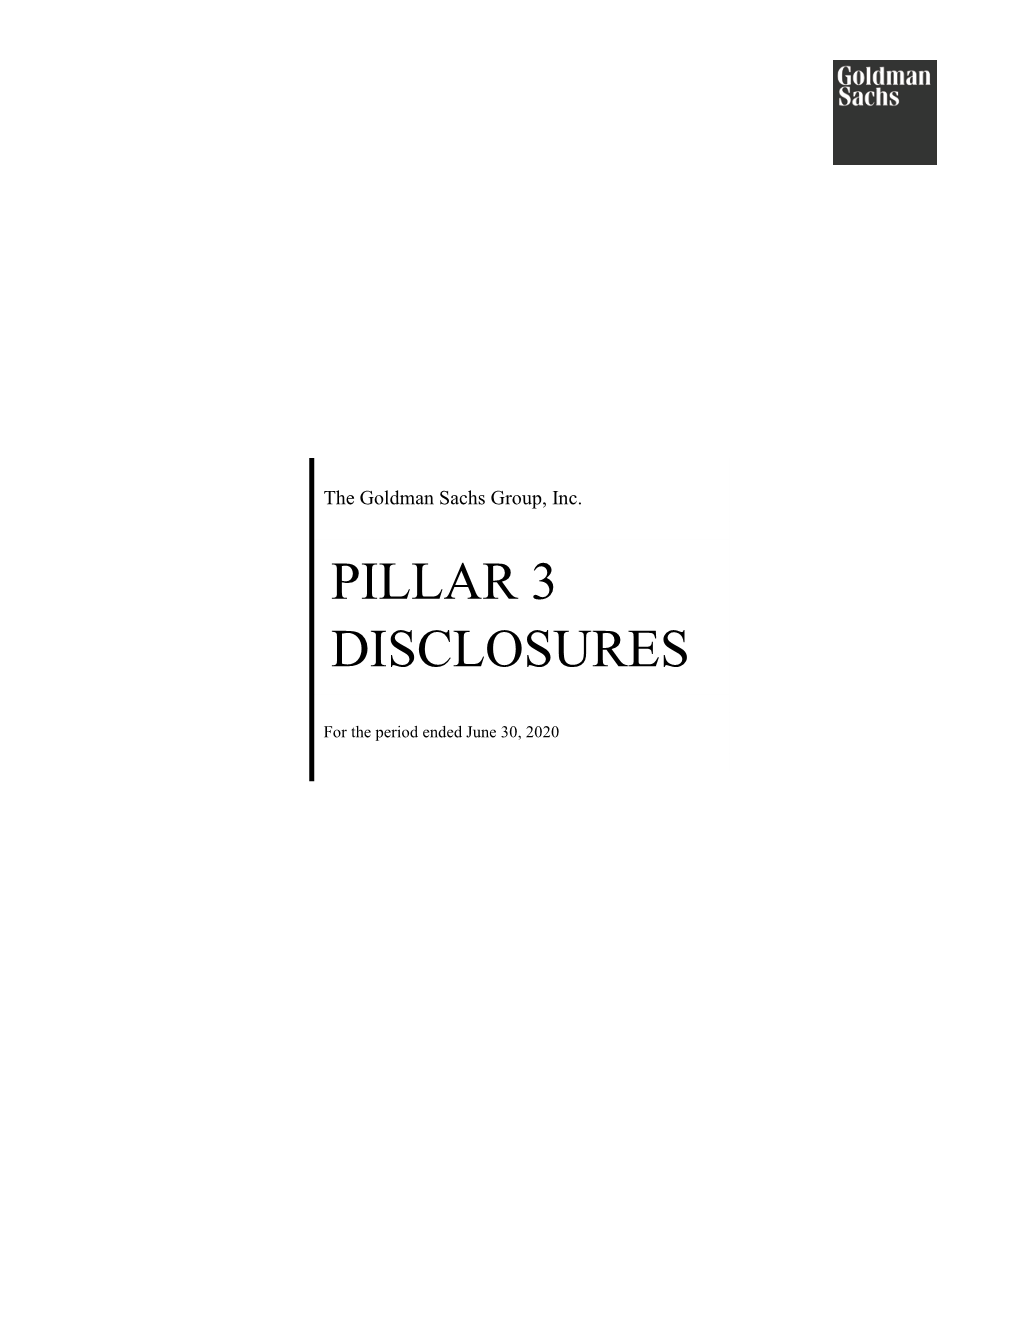 Second Quarter 2020 Pillar 3 Disclosures